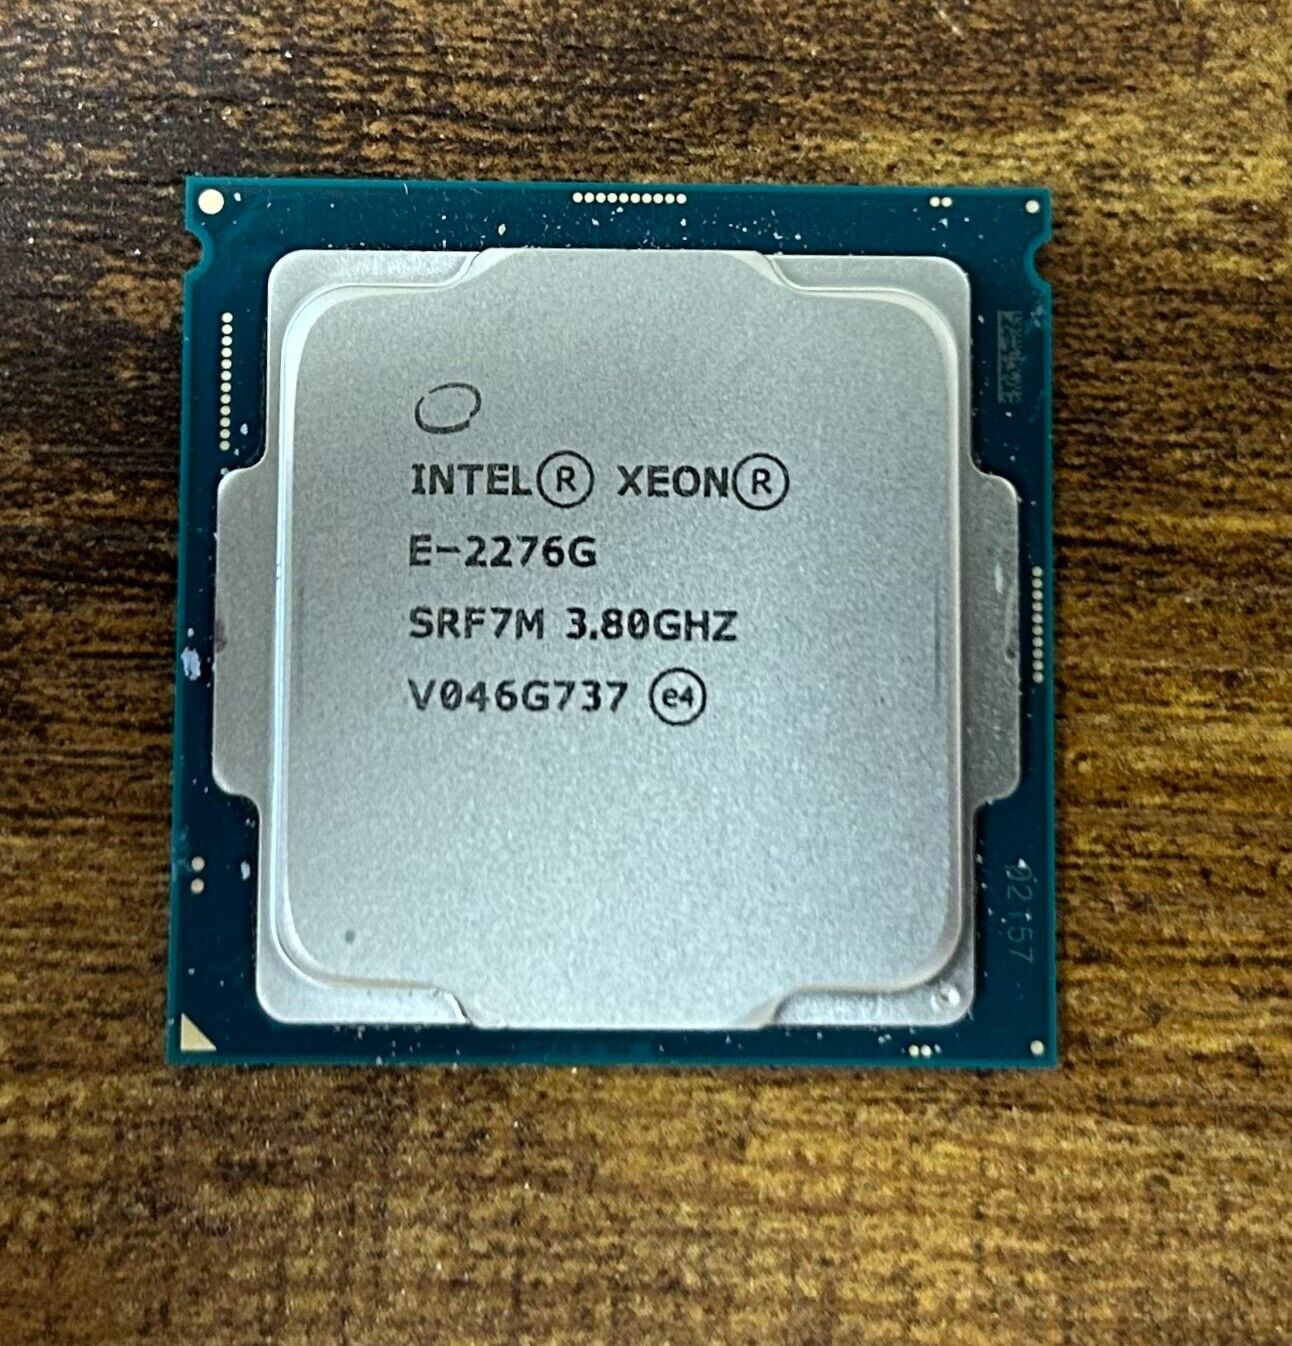 Intel Xeon E-2276G 3.8GHz Desktop CPU SRF7M